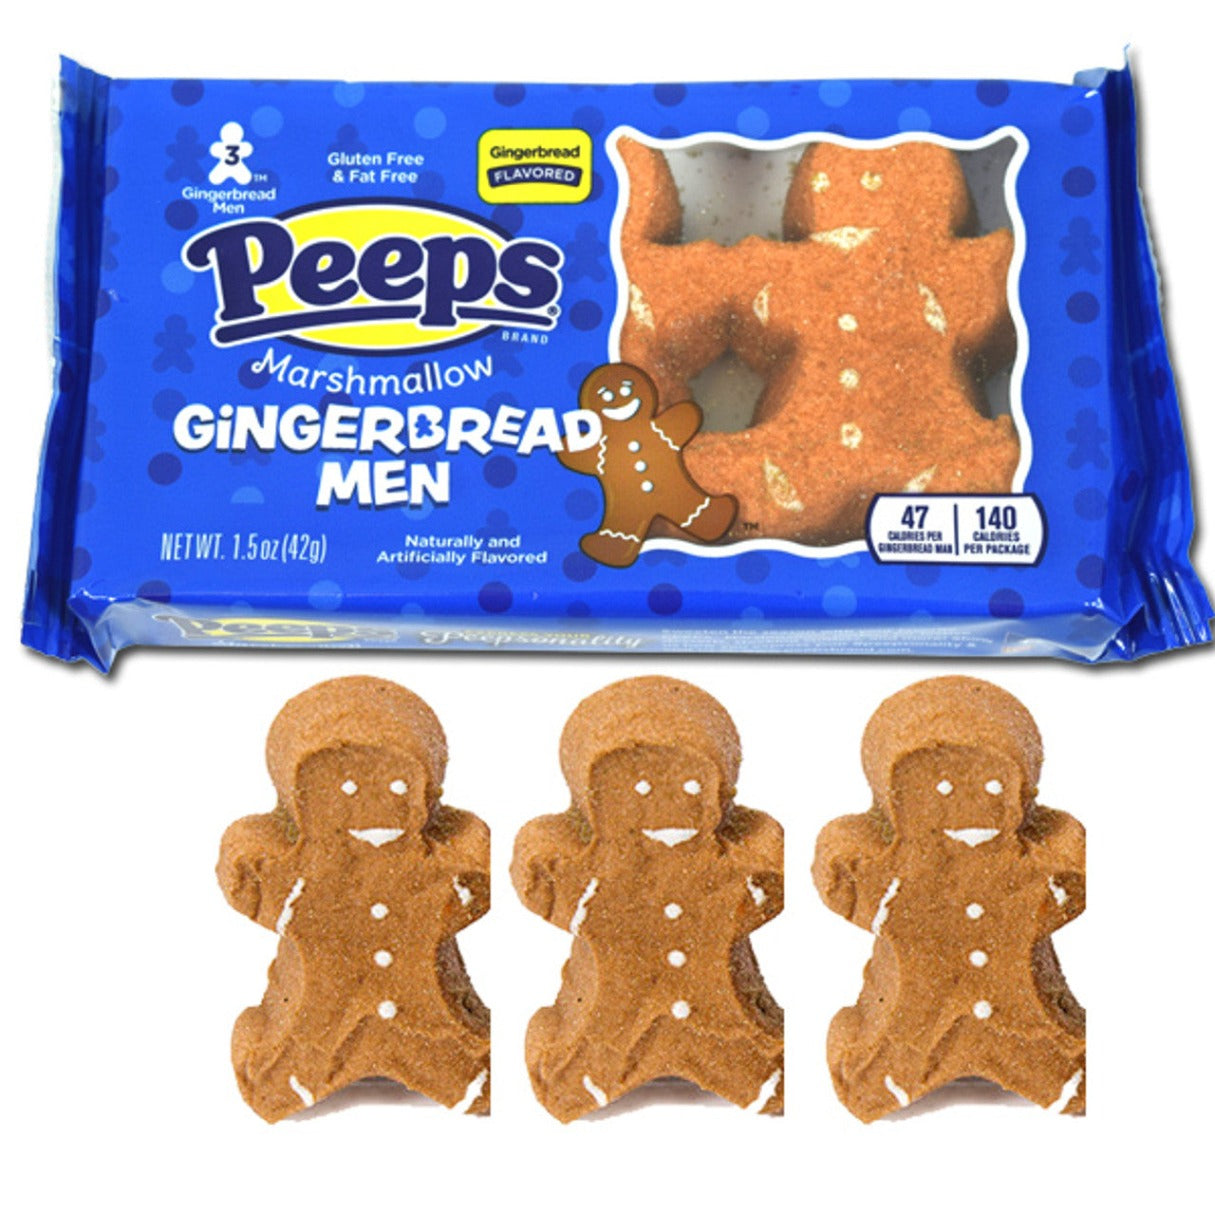 Peeps Gingerbread Men 1.5oz - 12ct